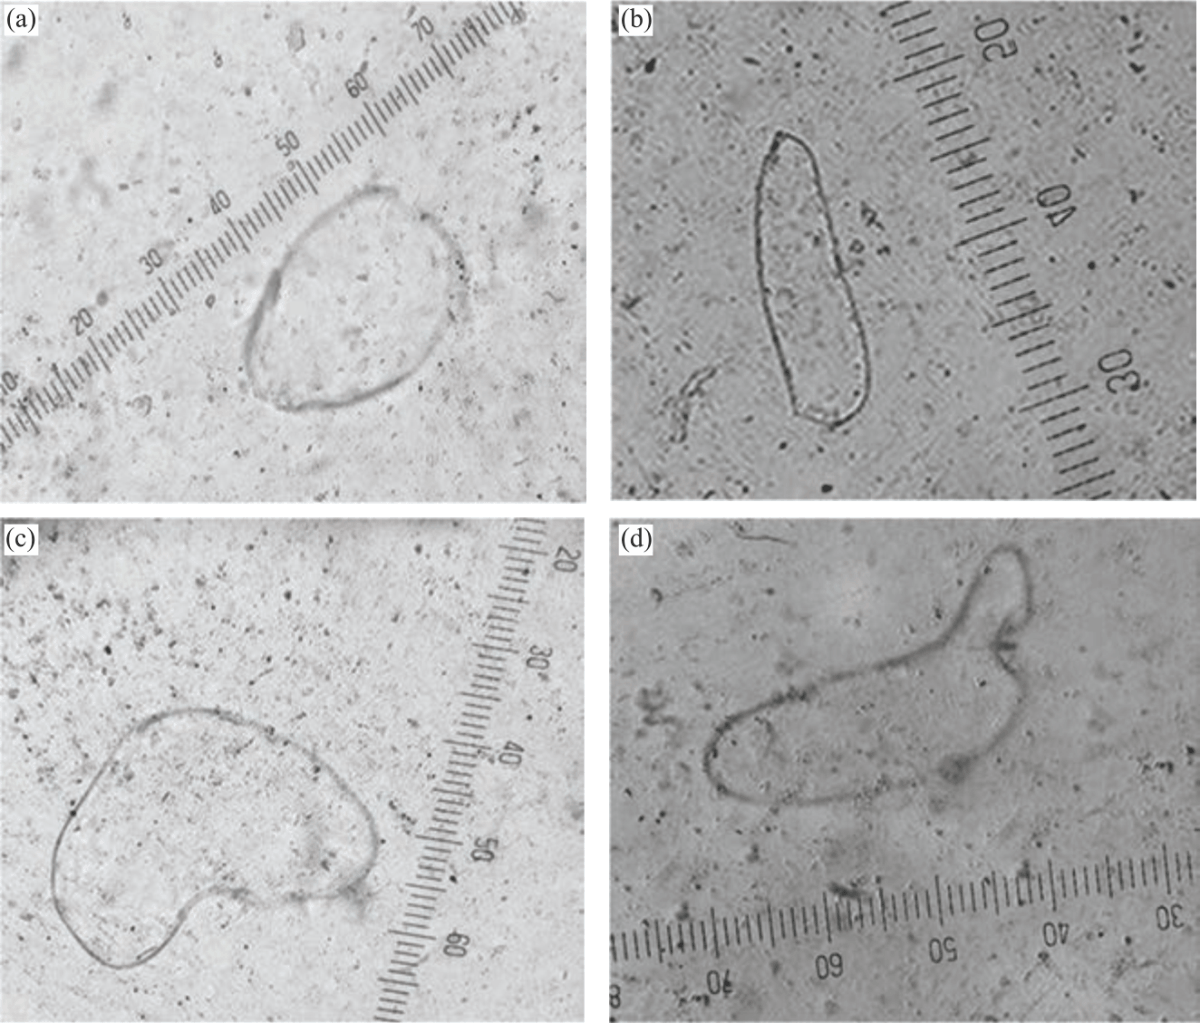 Image for - Phytoconstituents Profile and UPLC-ESI-MS/MS Analysis of Centaurea pumilio L. Callus Culture Following Elicitation